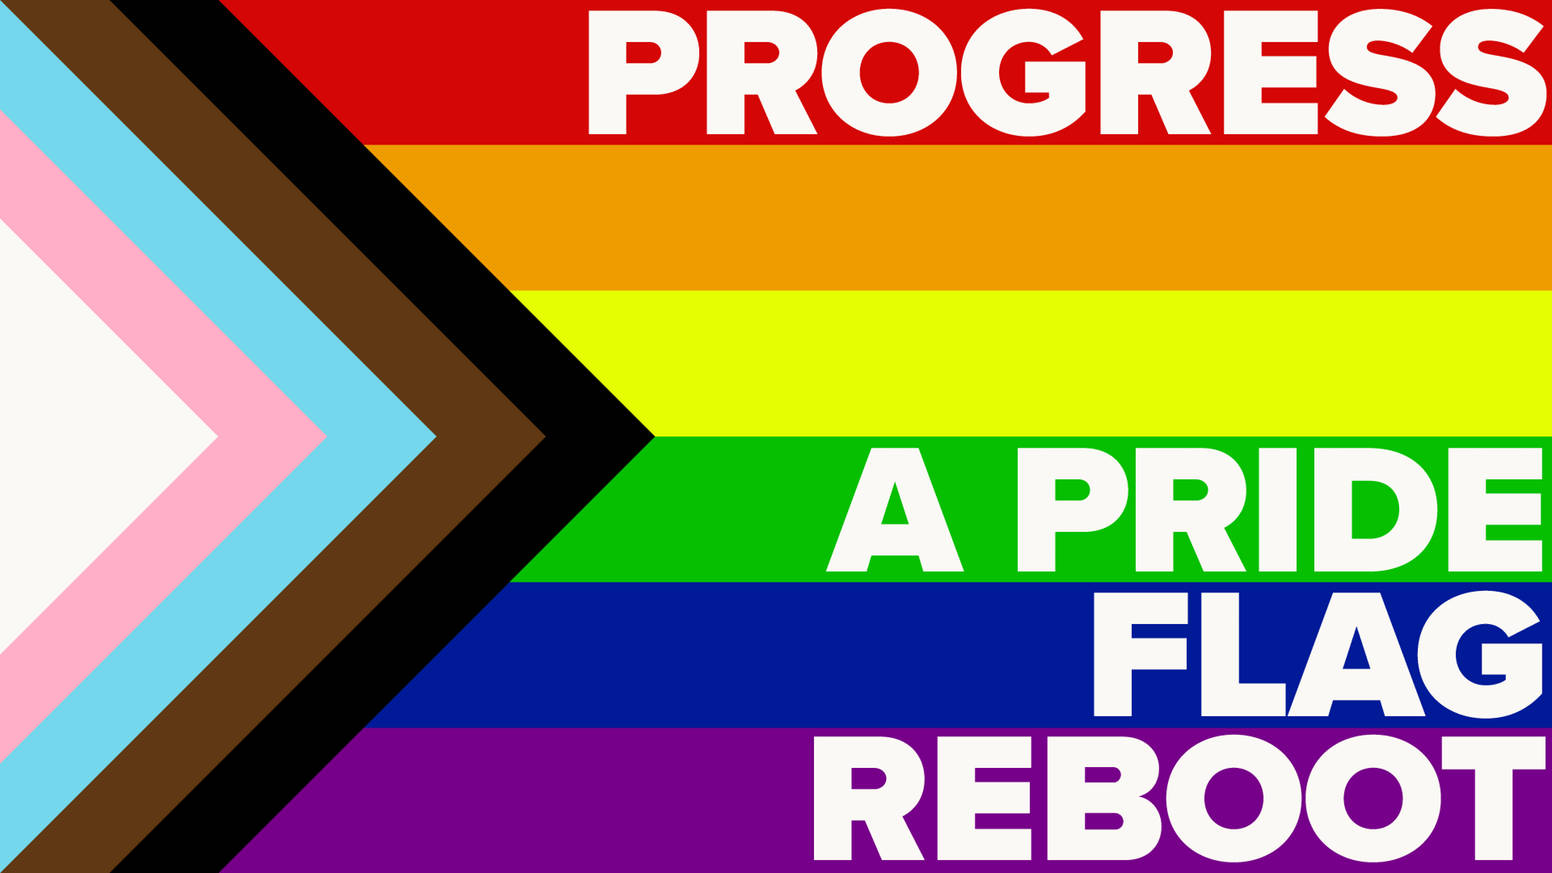 Pride Flag Progress Reboot Wallpaper